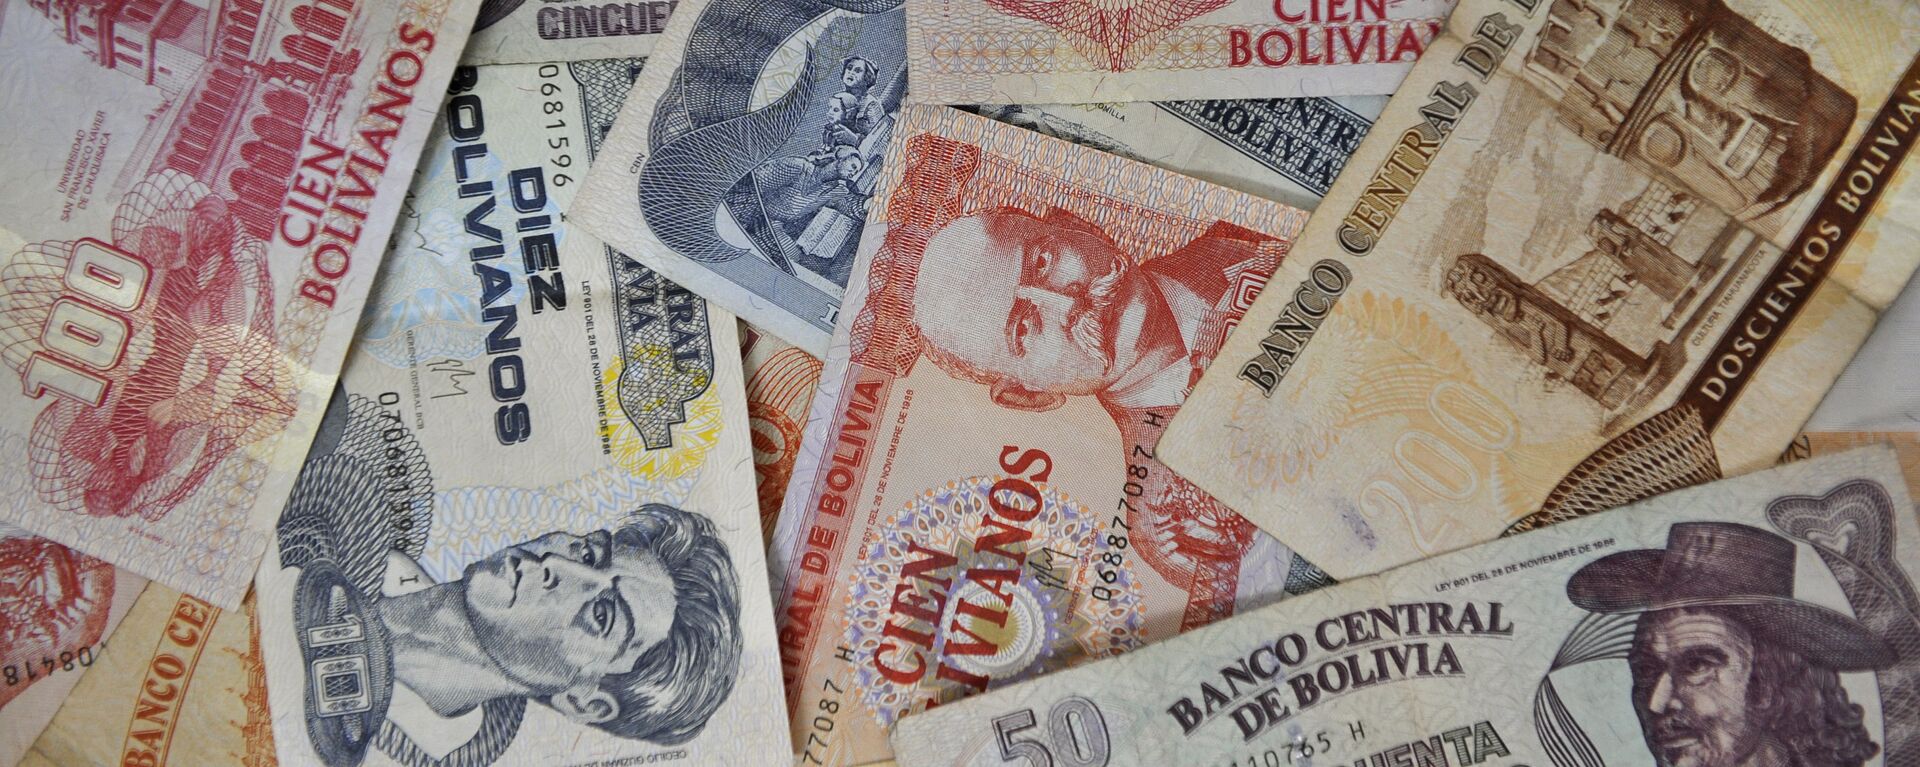 Bolivianos (billetes) - Sputnik Mundo, 1920, 03.11.2021